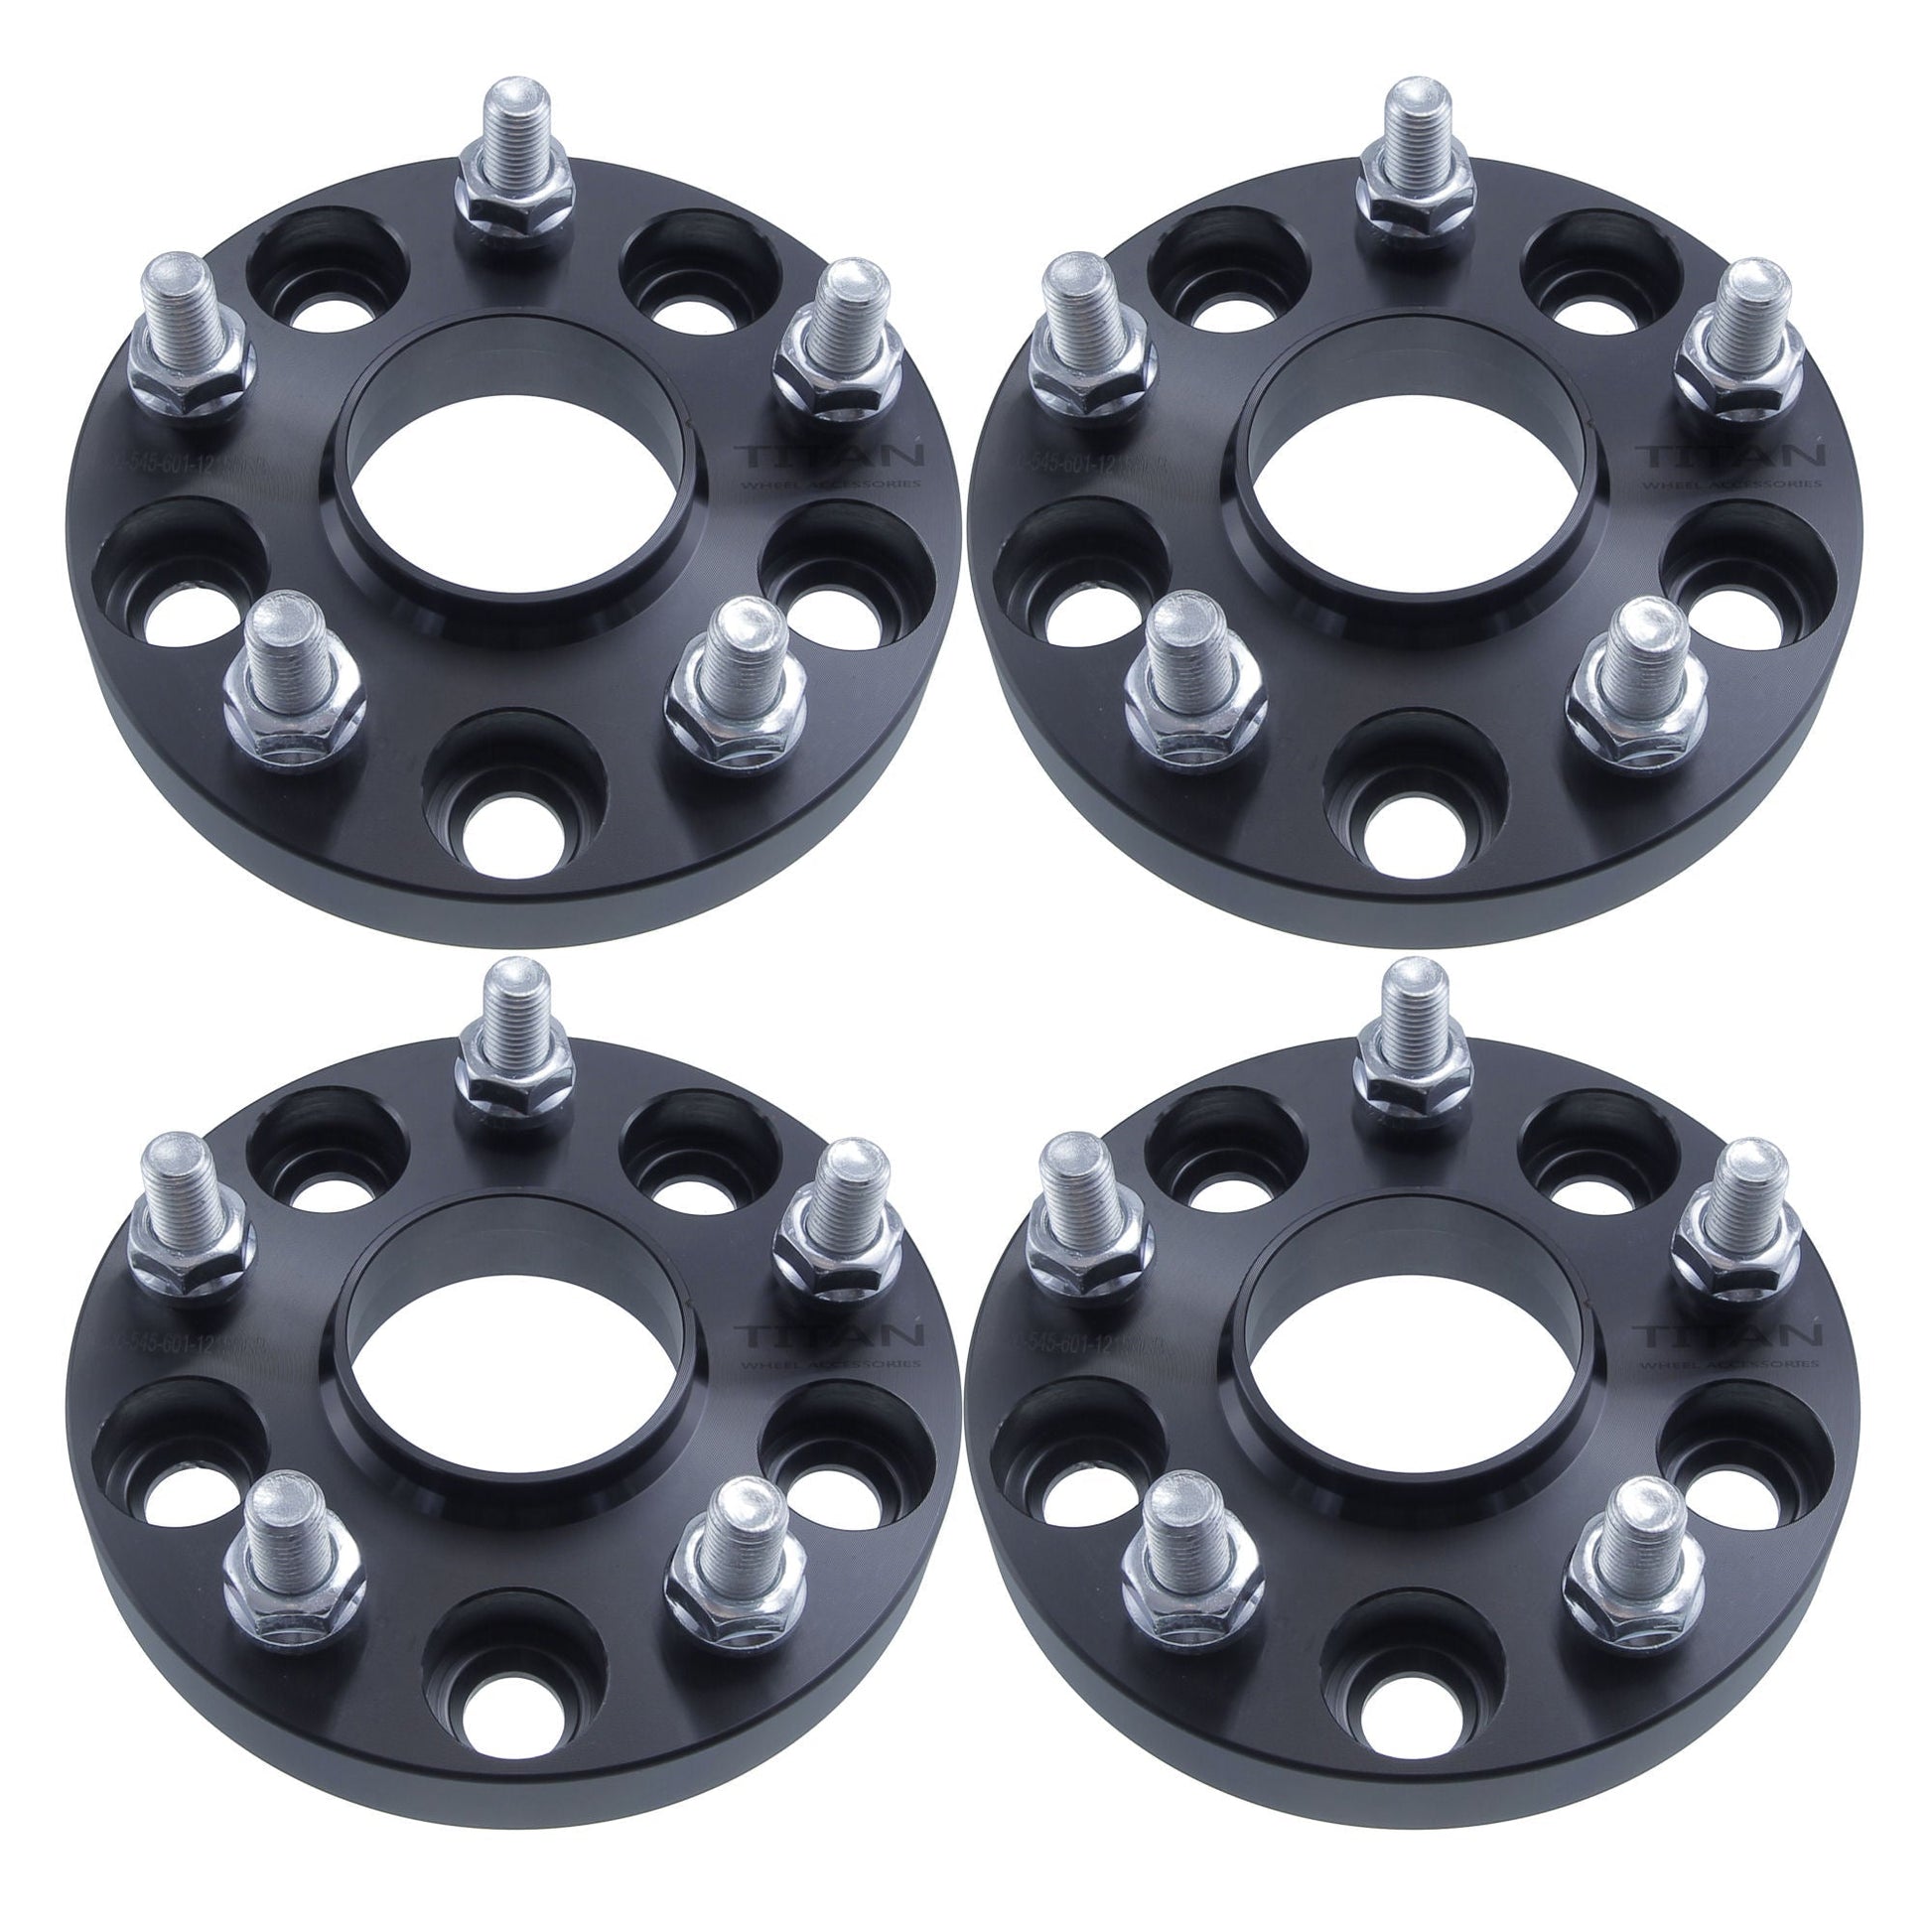 20mm Titan Wheel Spacers for Toyota Camry MR2 Supra Lexus | 5x114.3 | 60.1 Hubcentric | Set of 4 | Titan Wheel Accessories